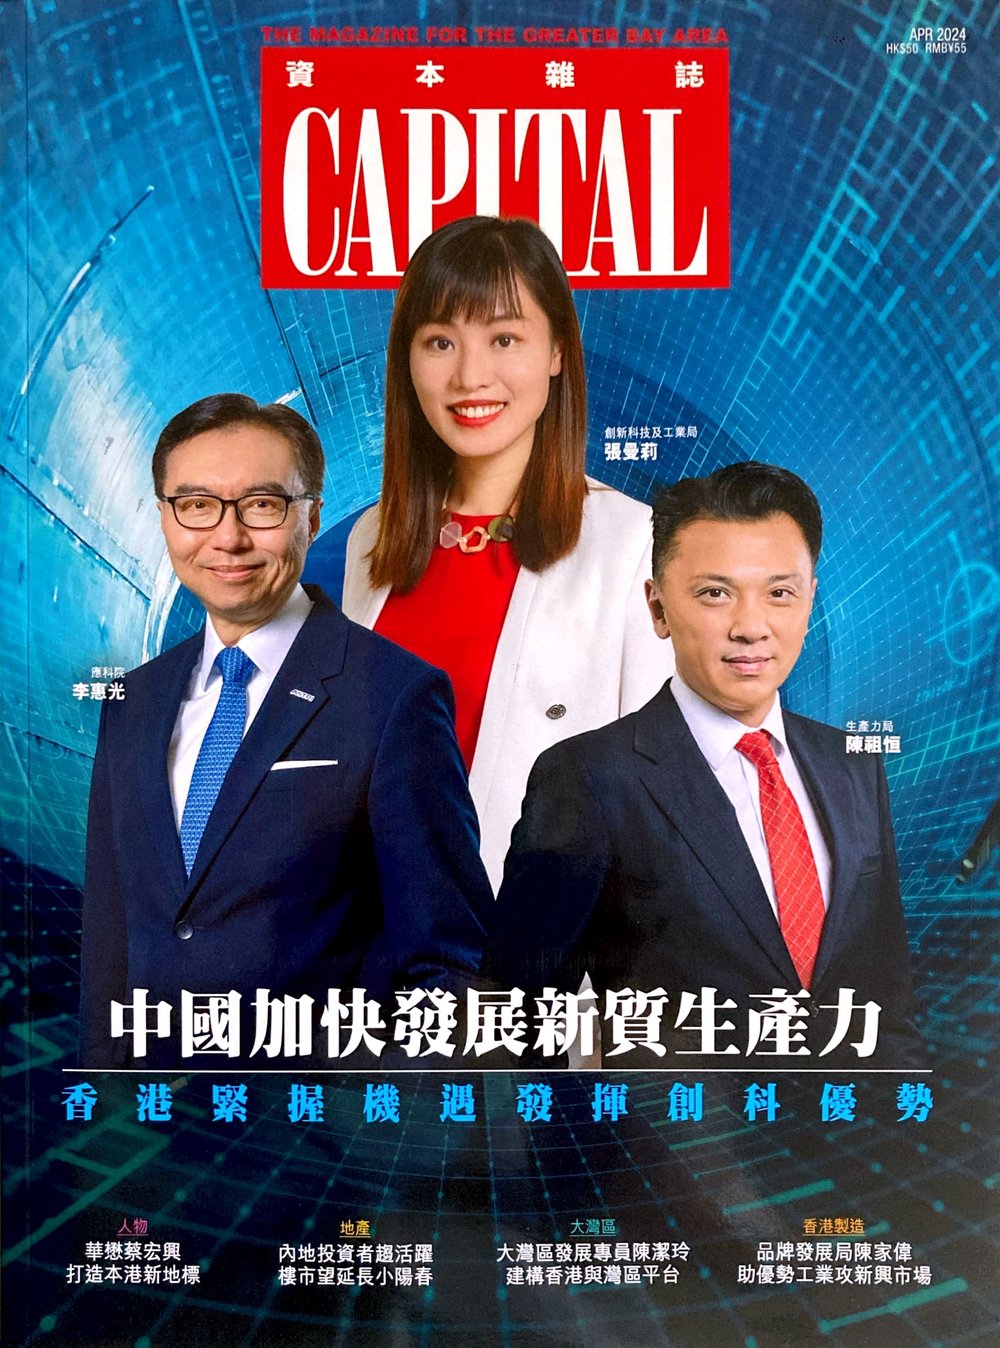 Capital Magazine issue 443.jpg